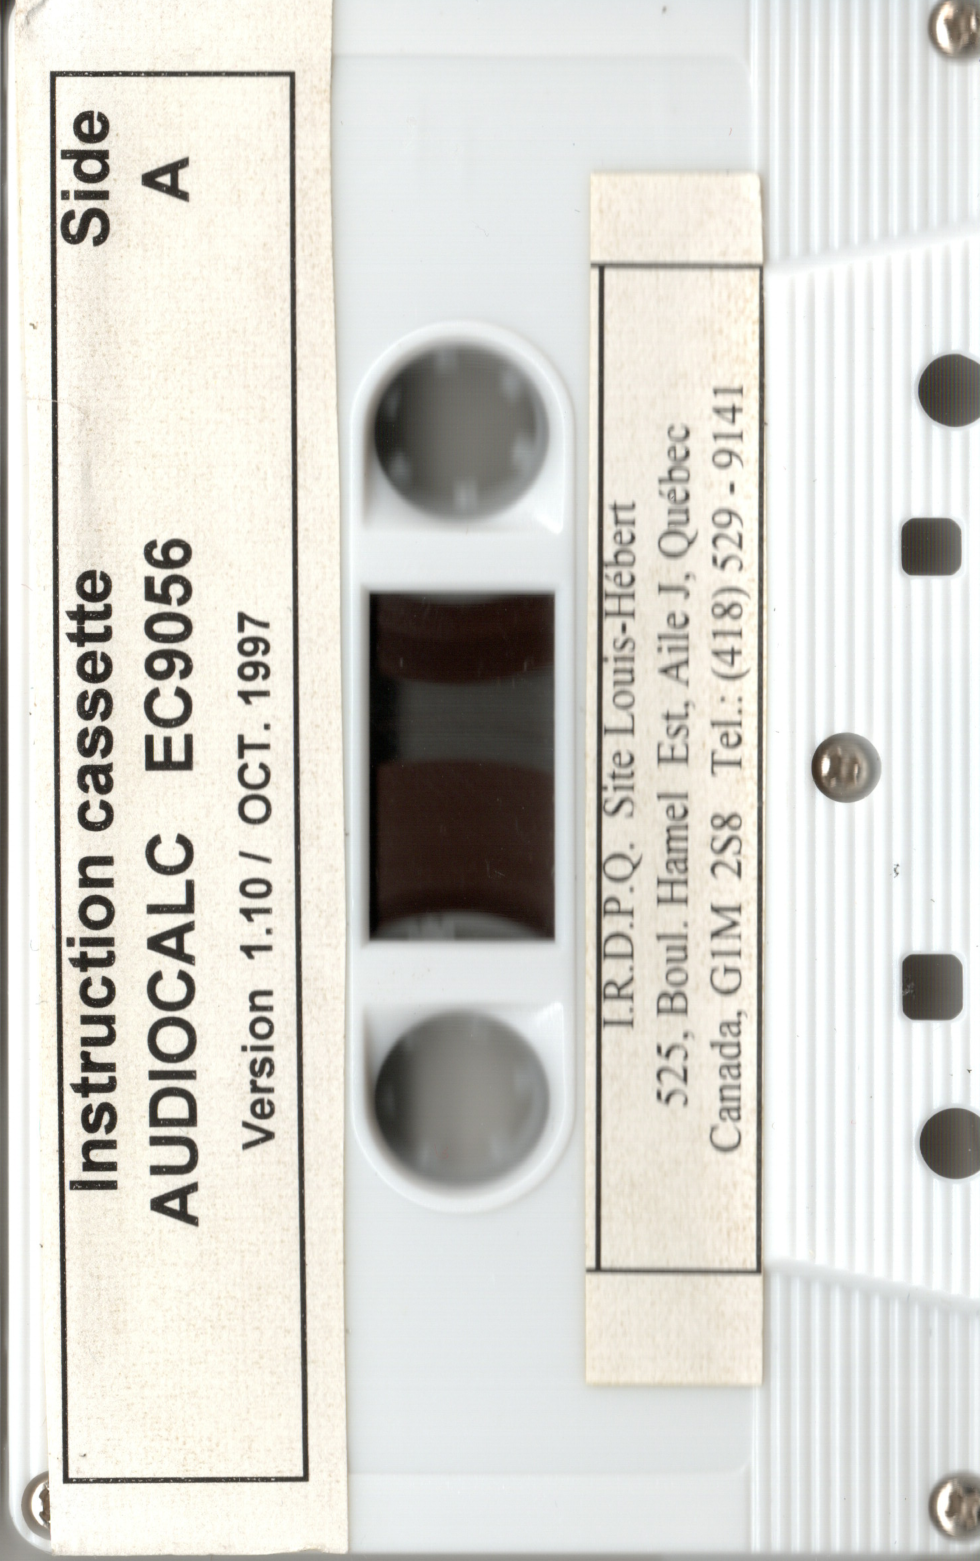 Instruction Cassette Audiocalc EC9056 Version 1.10 October 1997